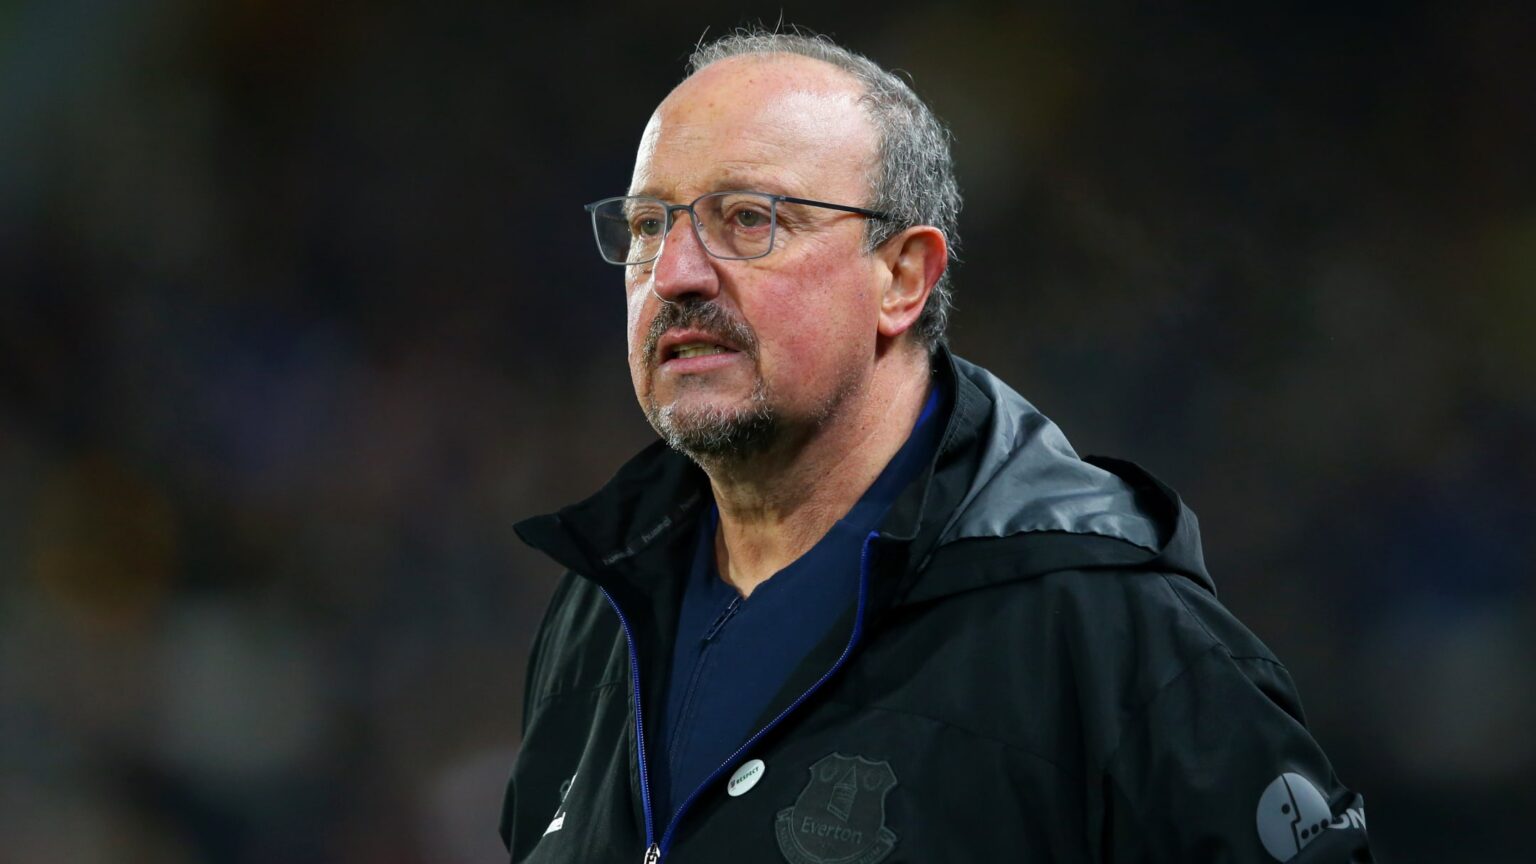 Breaking News – Everton have sacked Manager Rafa Benitez